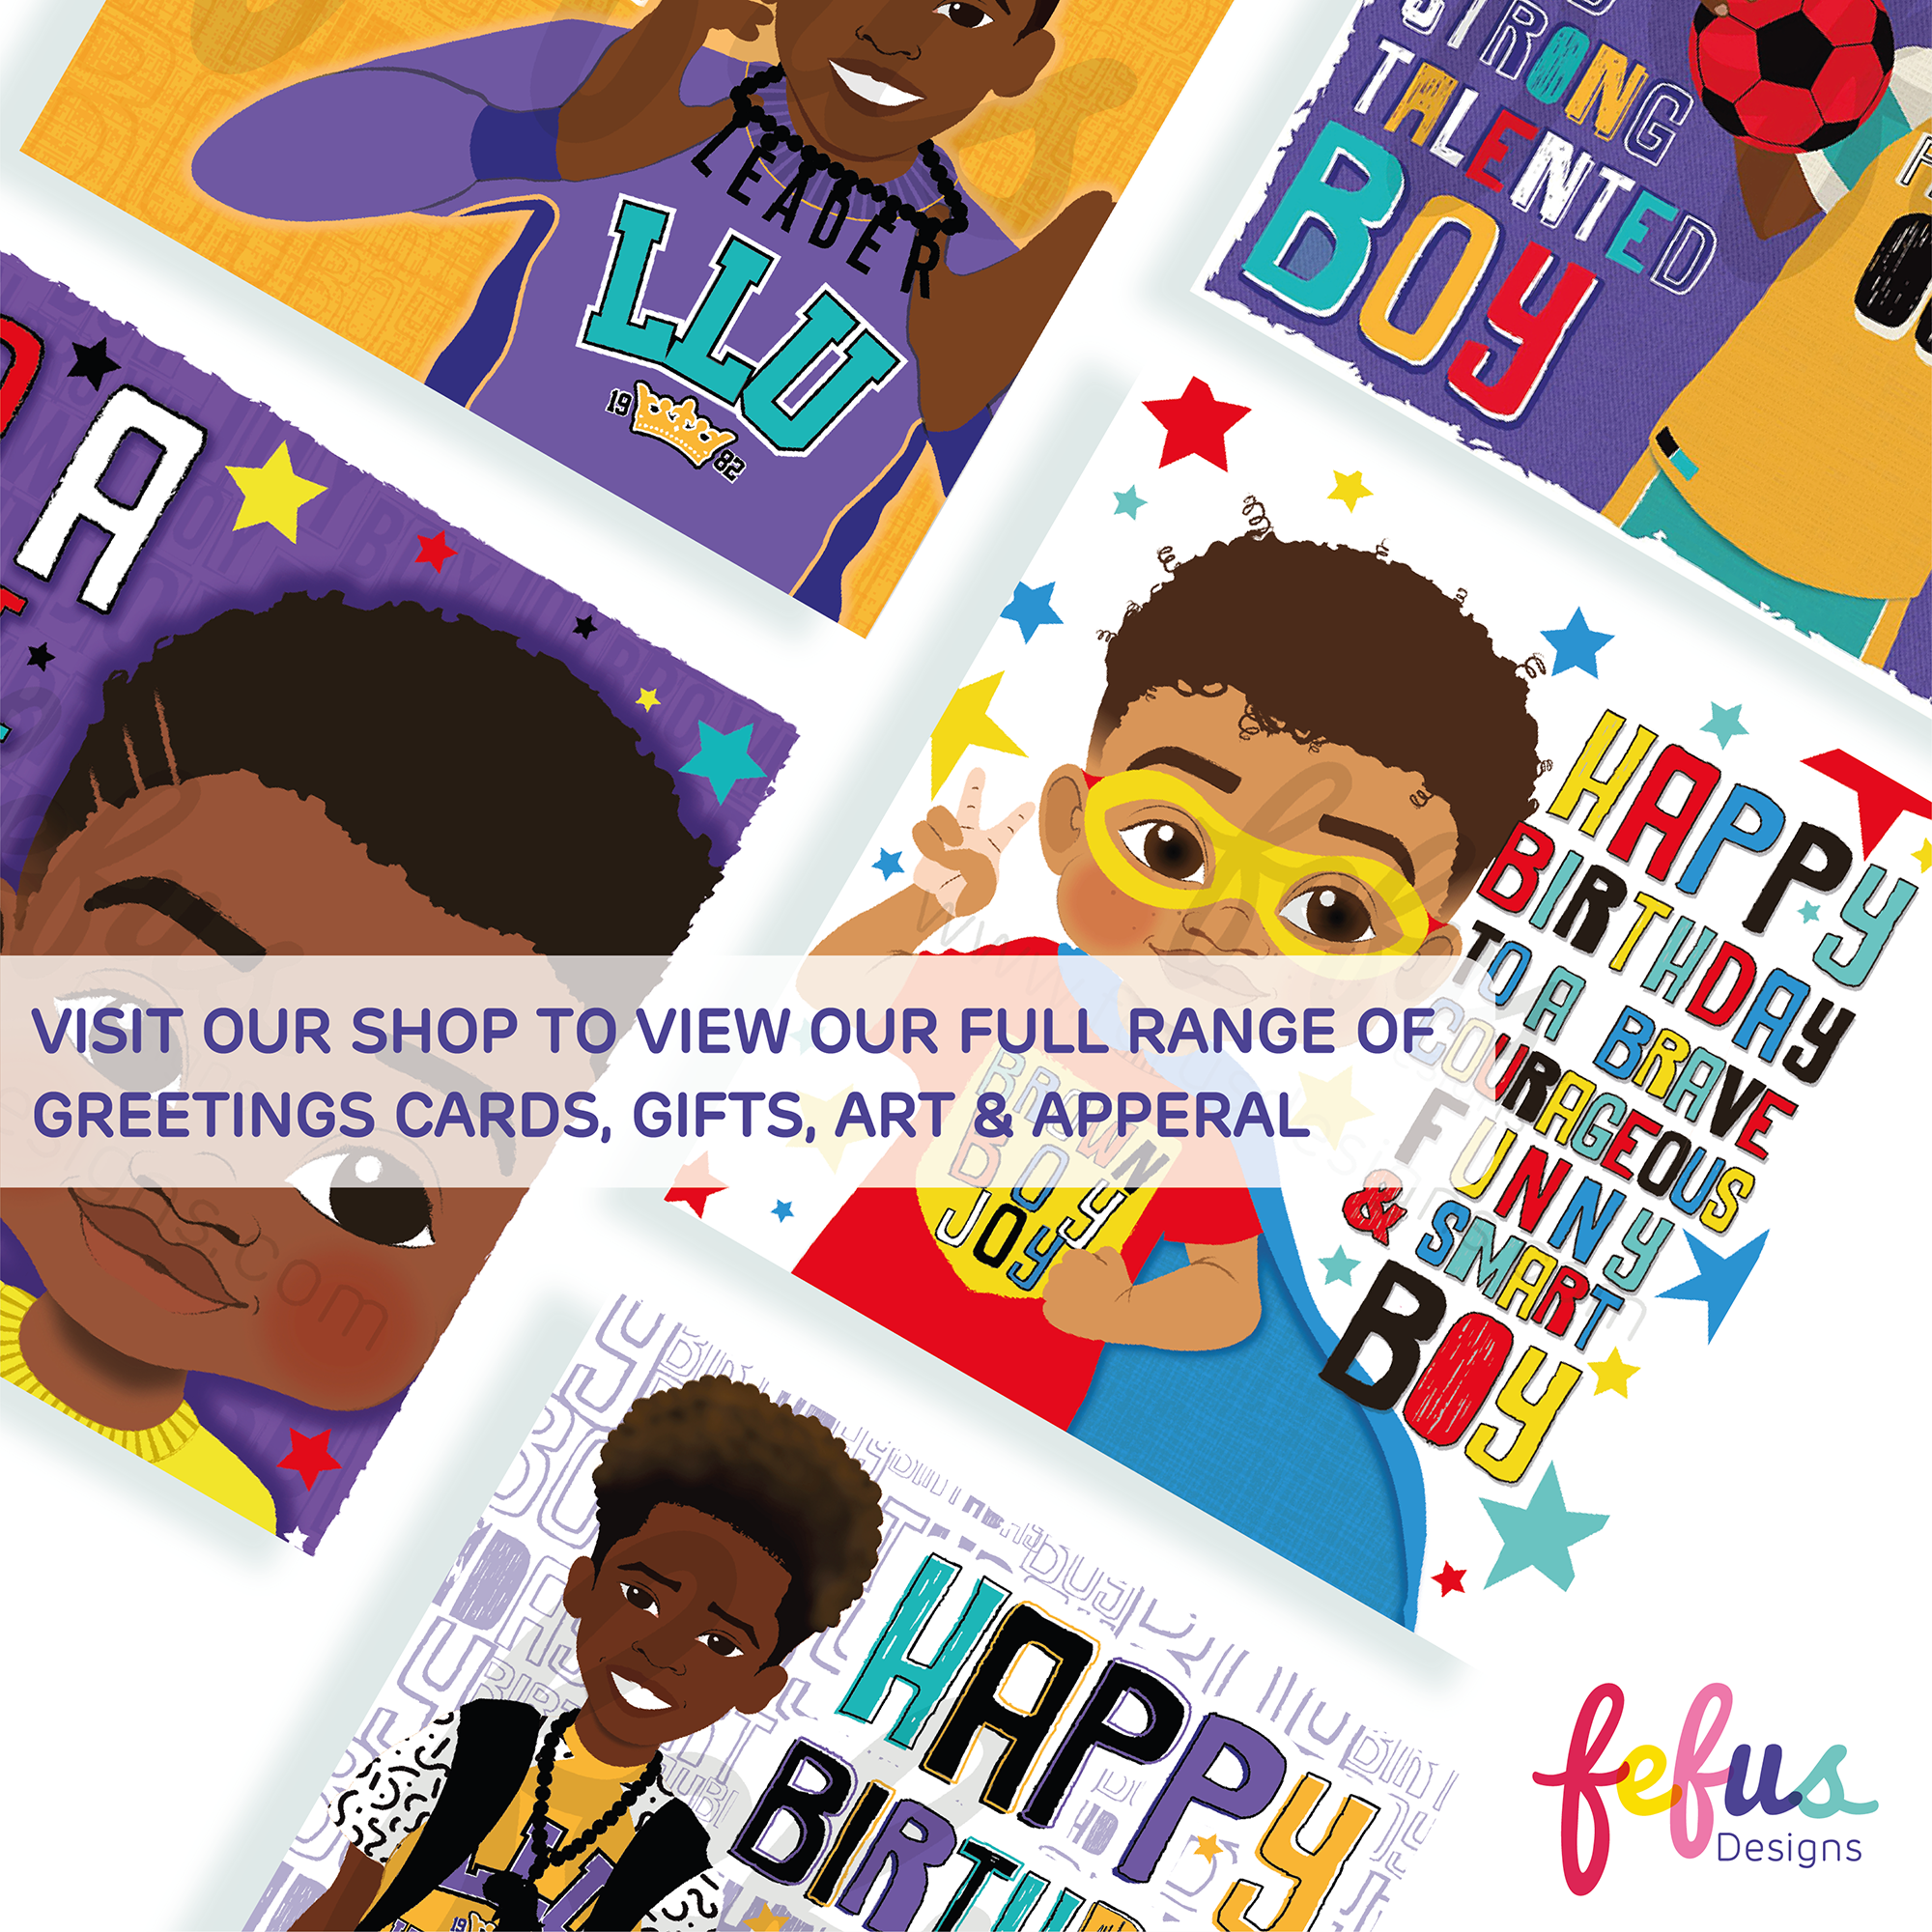 4 Brown Boys - Black childrens Greetings Card | Fefus designs